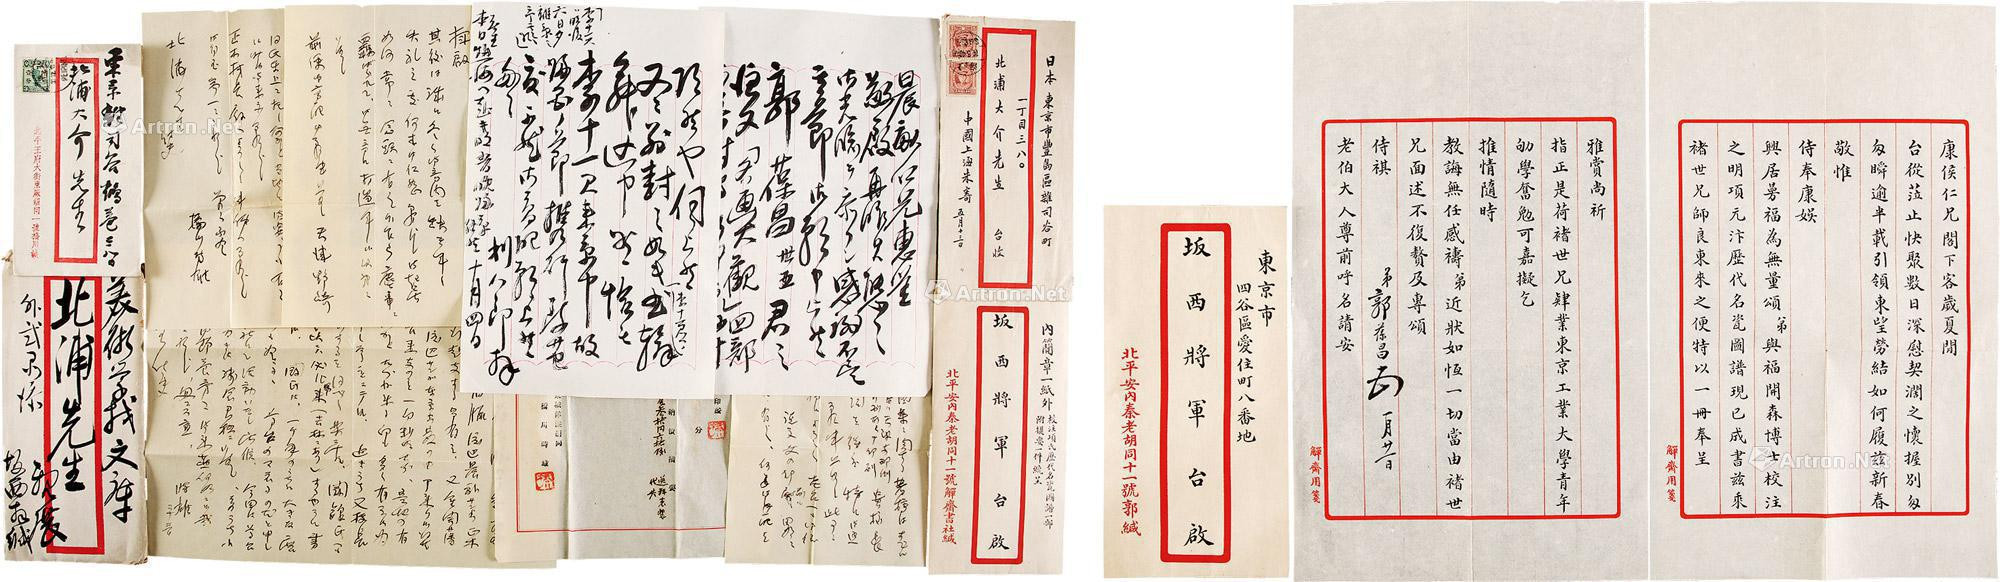 Group of letter and reference of Guo Baochang， Ban Xili Balang， Qiao Chuan Shixiong， with original covers